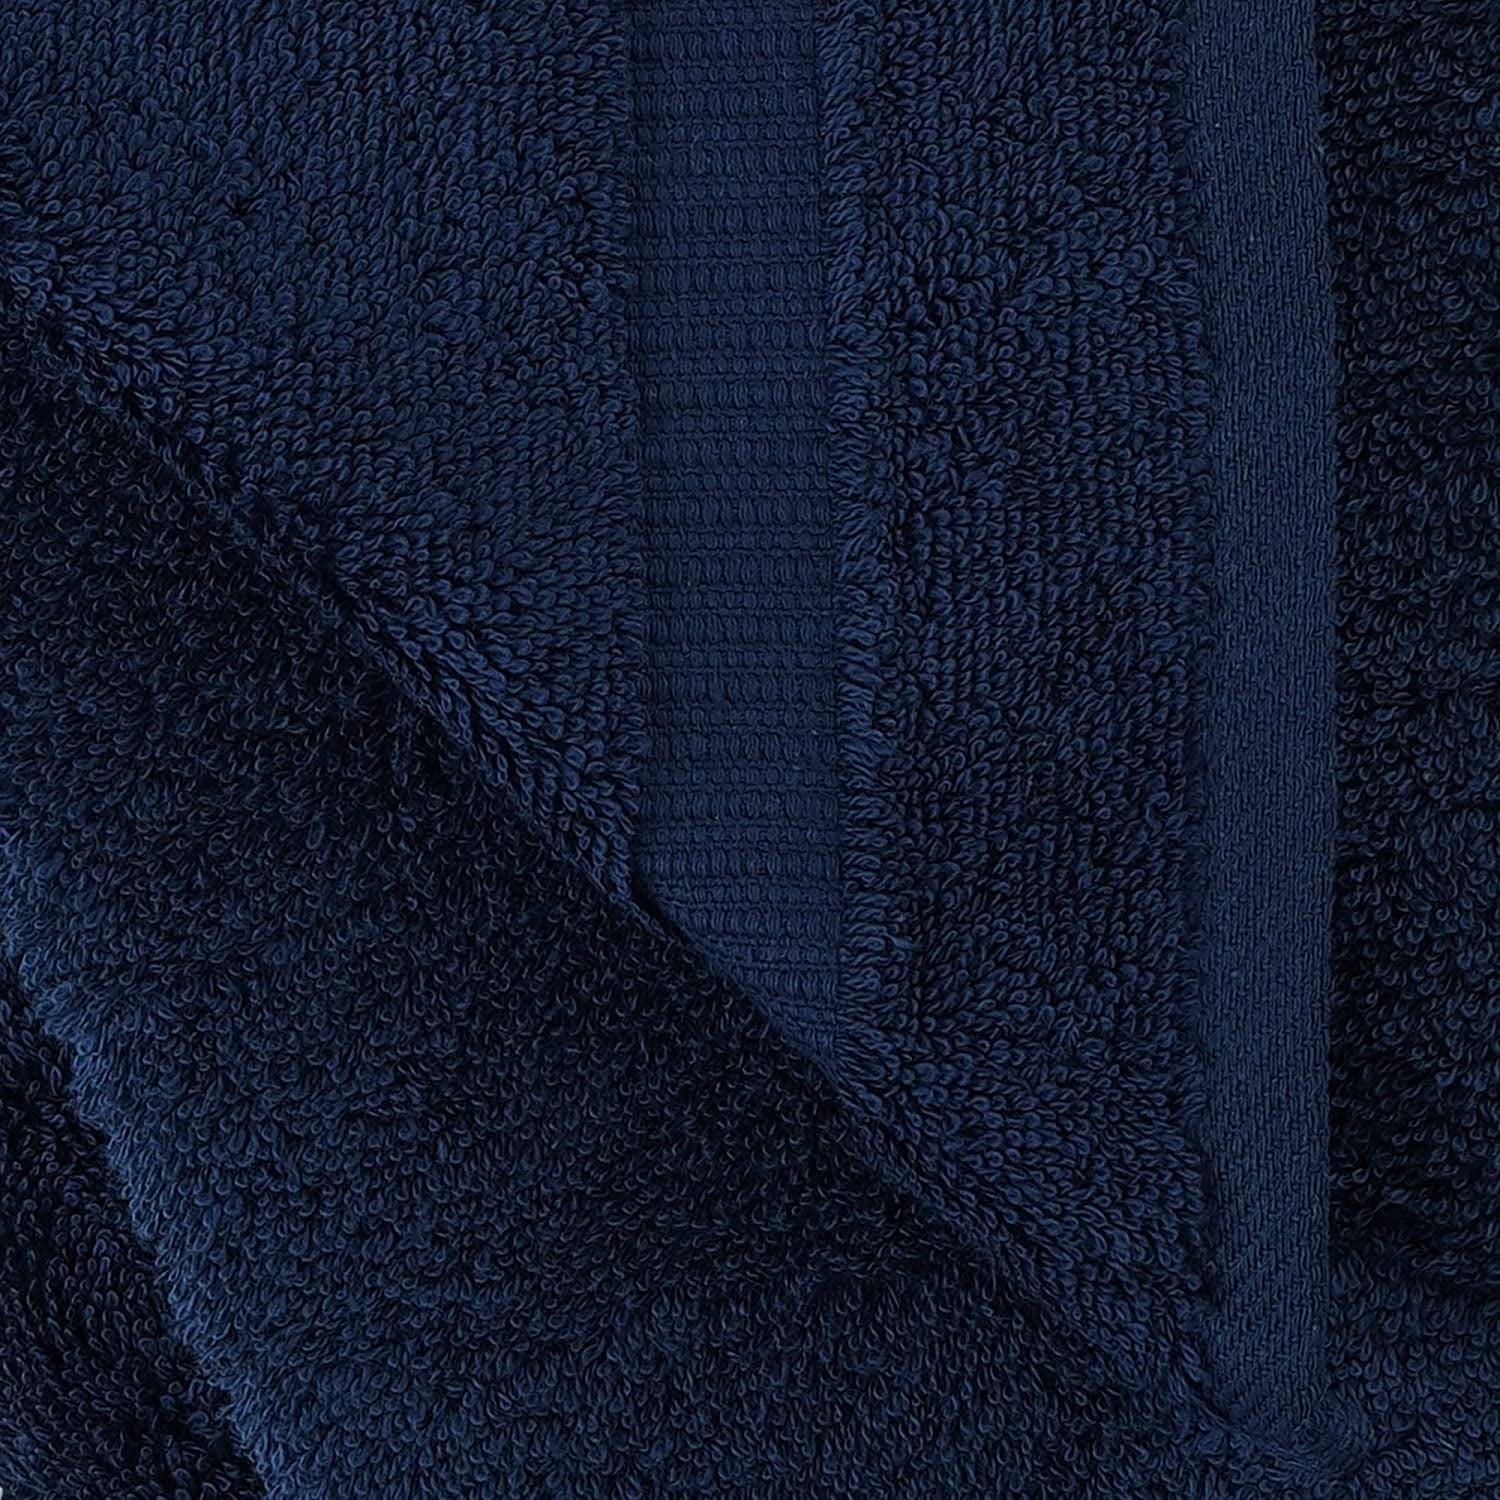 Premium Turkish Cotton Super Soft and Absorbent Towels (4-Piece Bath Towels, Navy Blue)